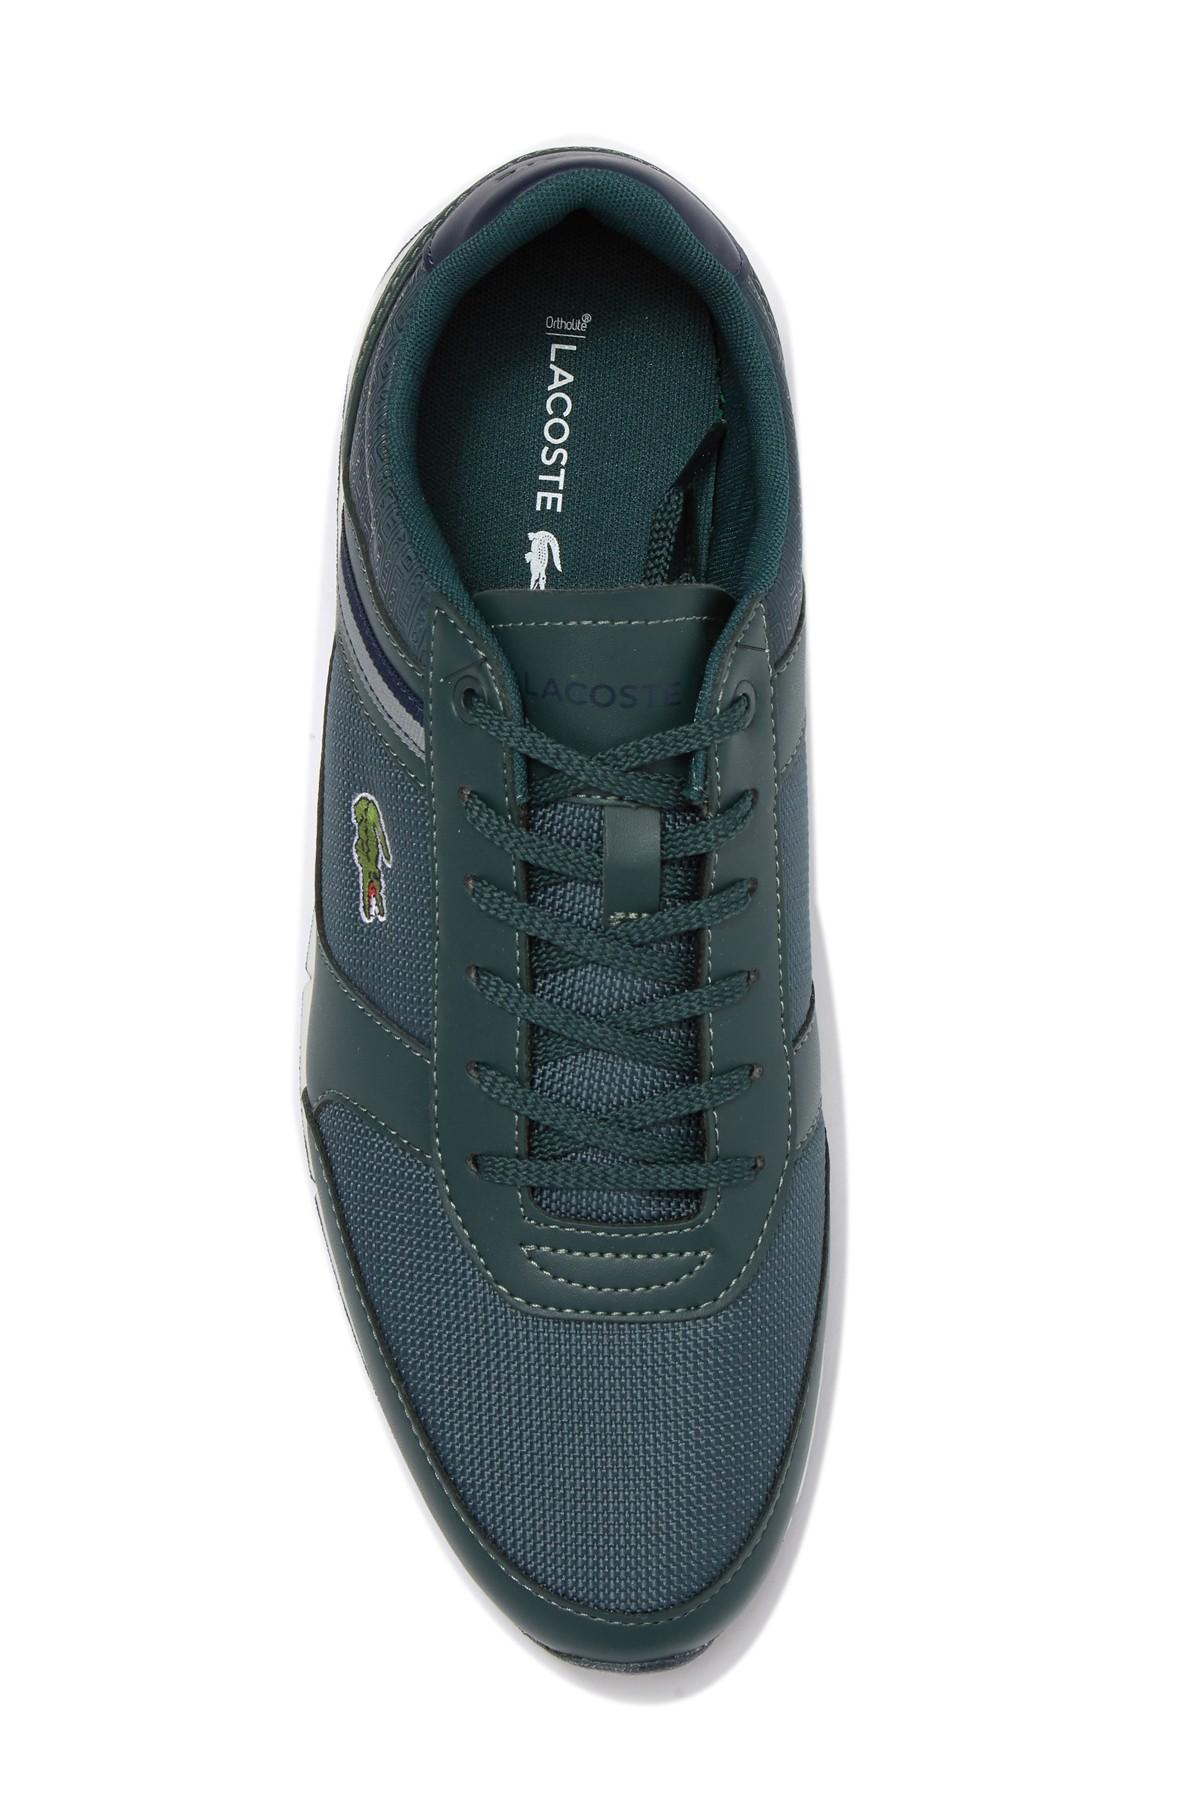 Lacoste Synthetic Menerva Sport 319 Sneaker in Dark Green/Navy (Blue) for  Men - Lyst